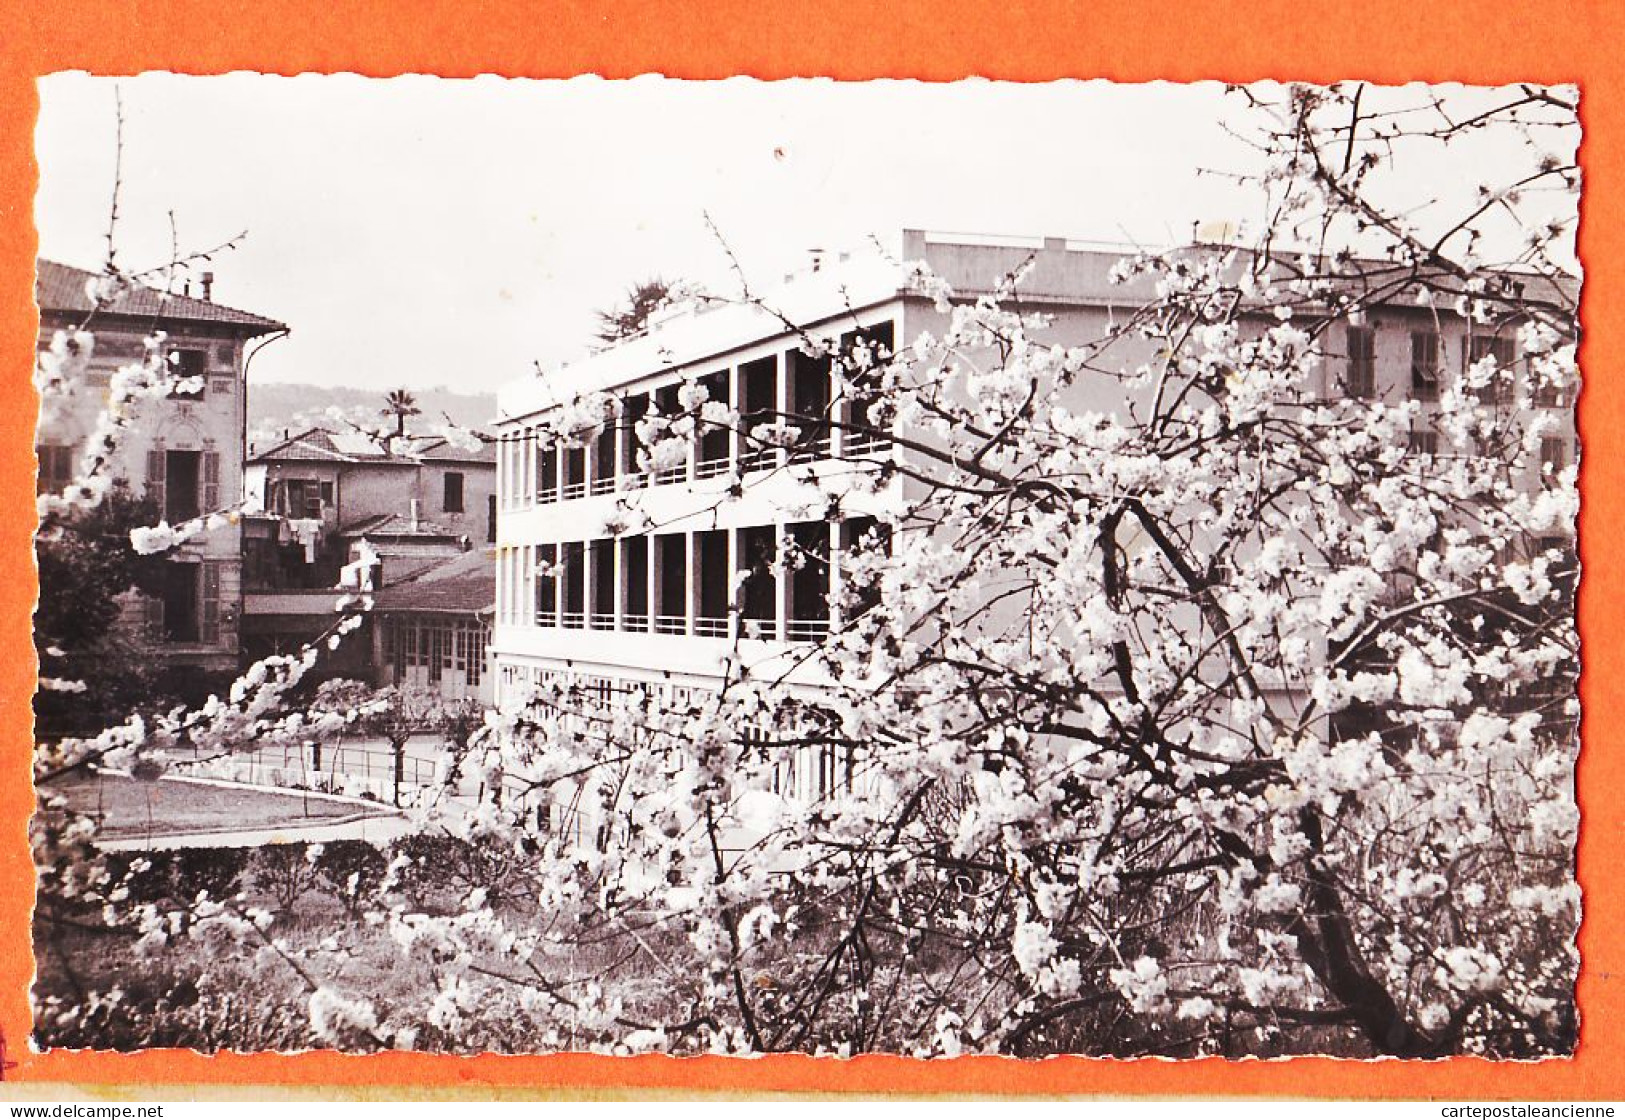 03507 / NICE Pavillon NOTRE-DAME N-D Foyer SAINT-DOMINIQUE Repos Convalescence Avenue ACACIAS 1950s Photo-Bromure - Health, Hospitals